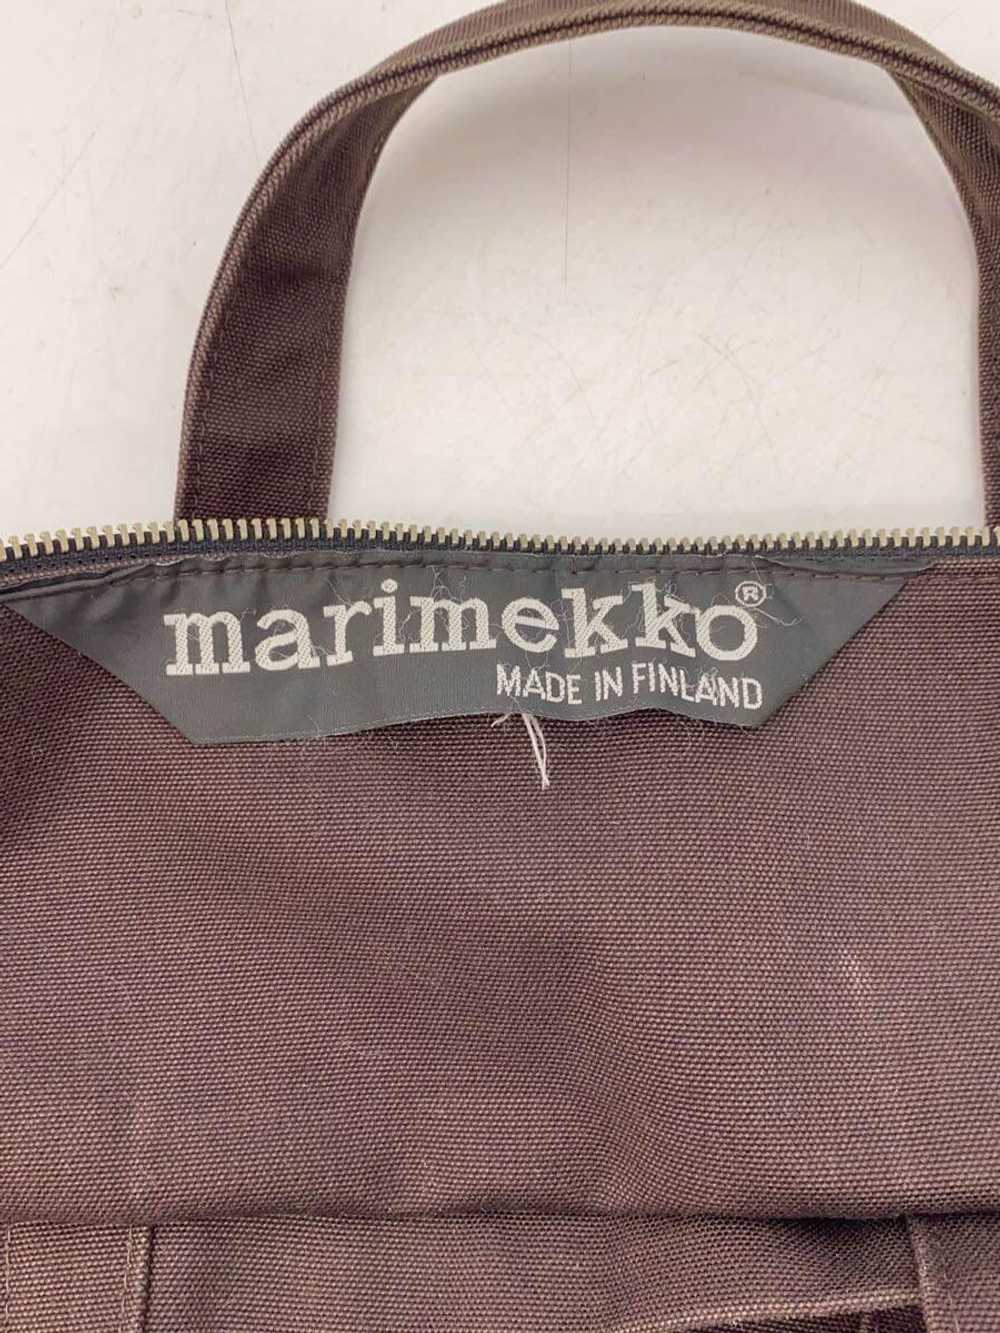 Marimekko Tote Bag/Cotton/Brw Bag - image 5